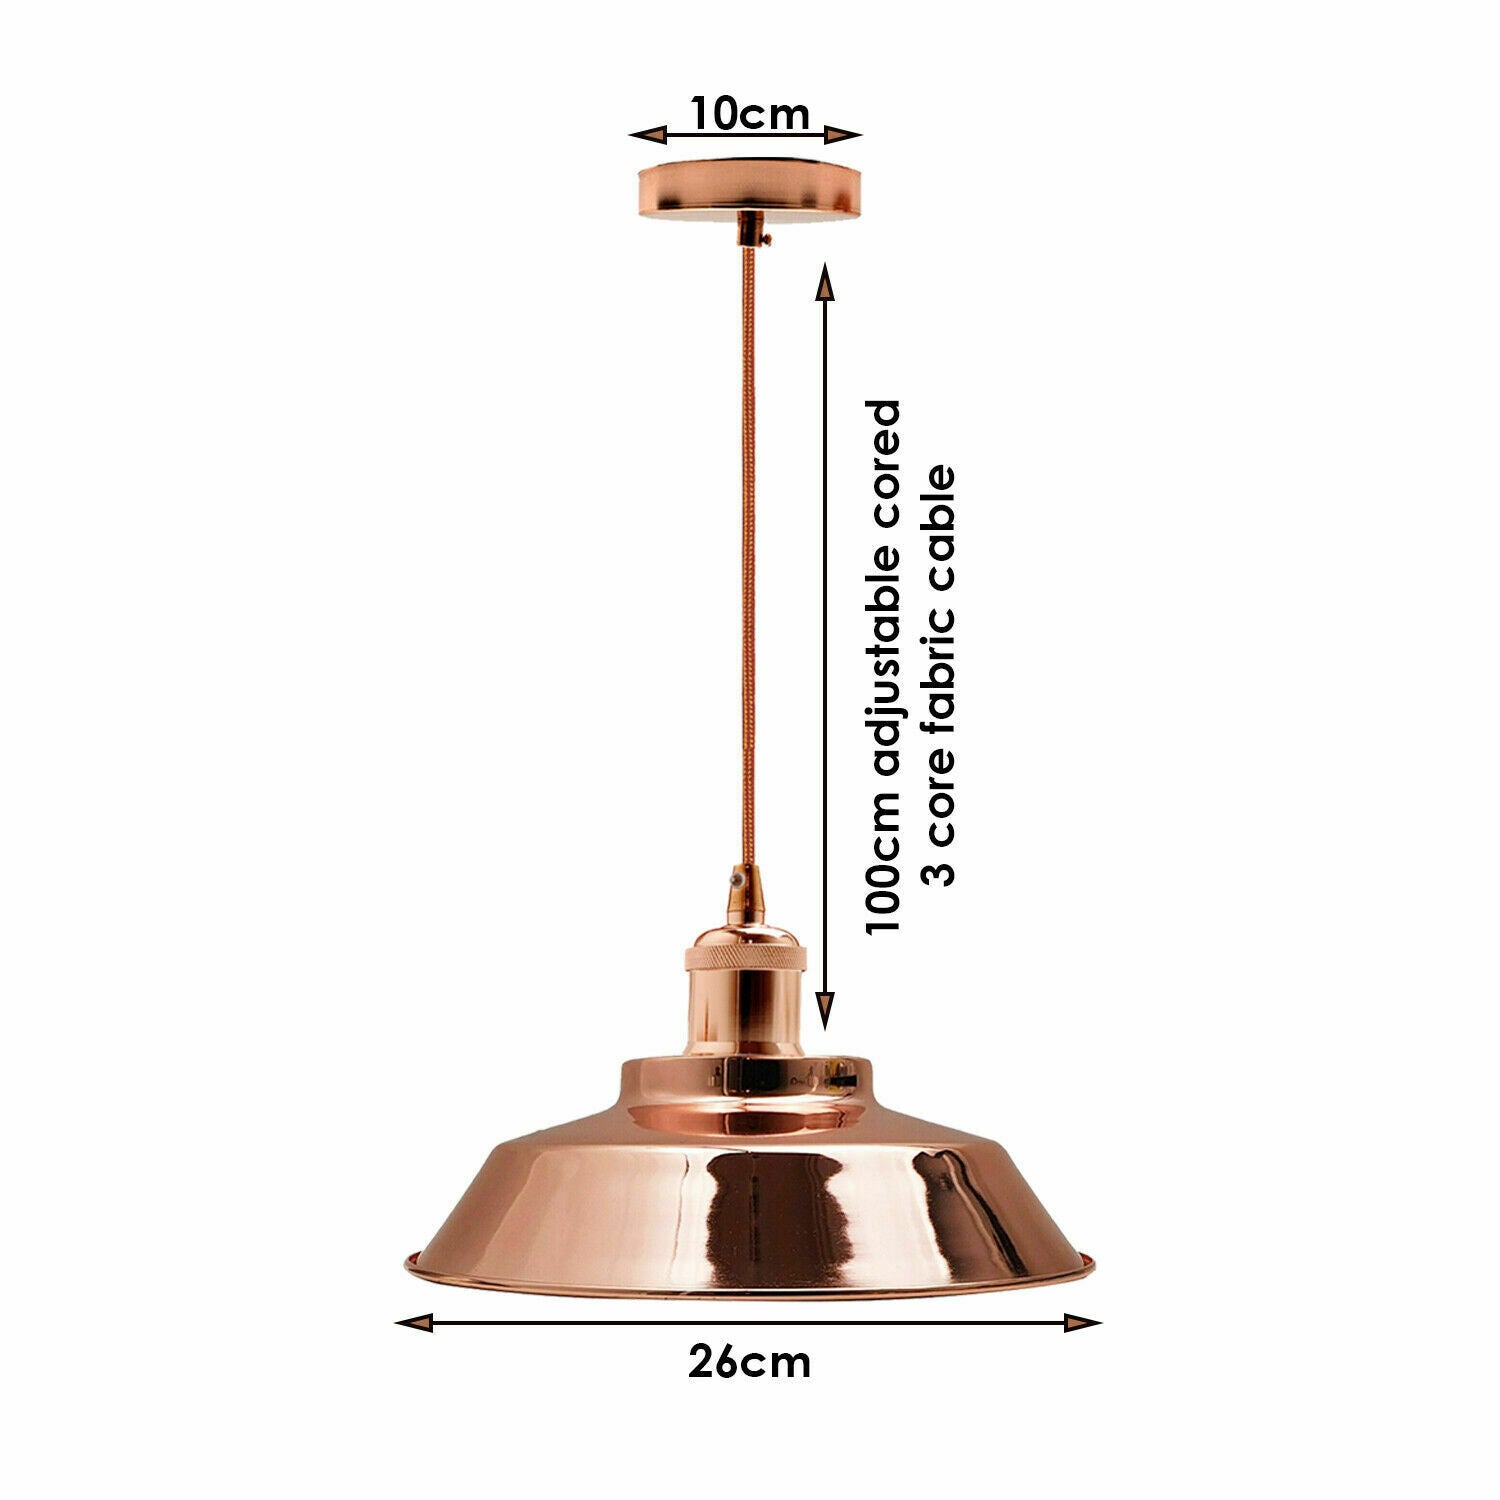 Industrieller Hängelampenschirm aus roségoldenem Metall 26 cm